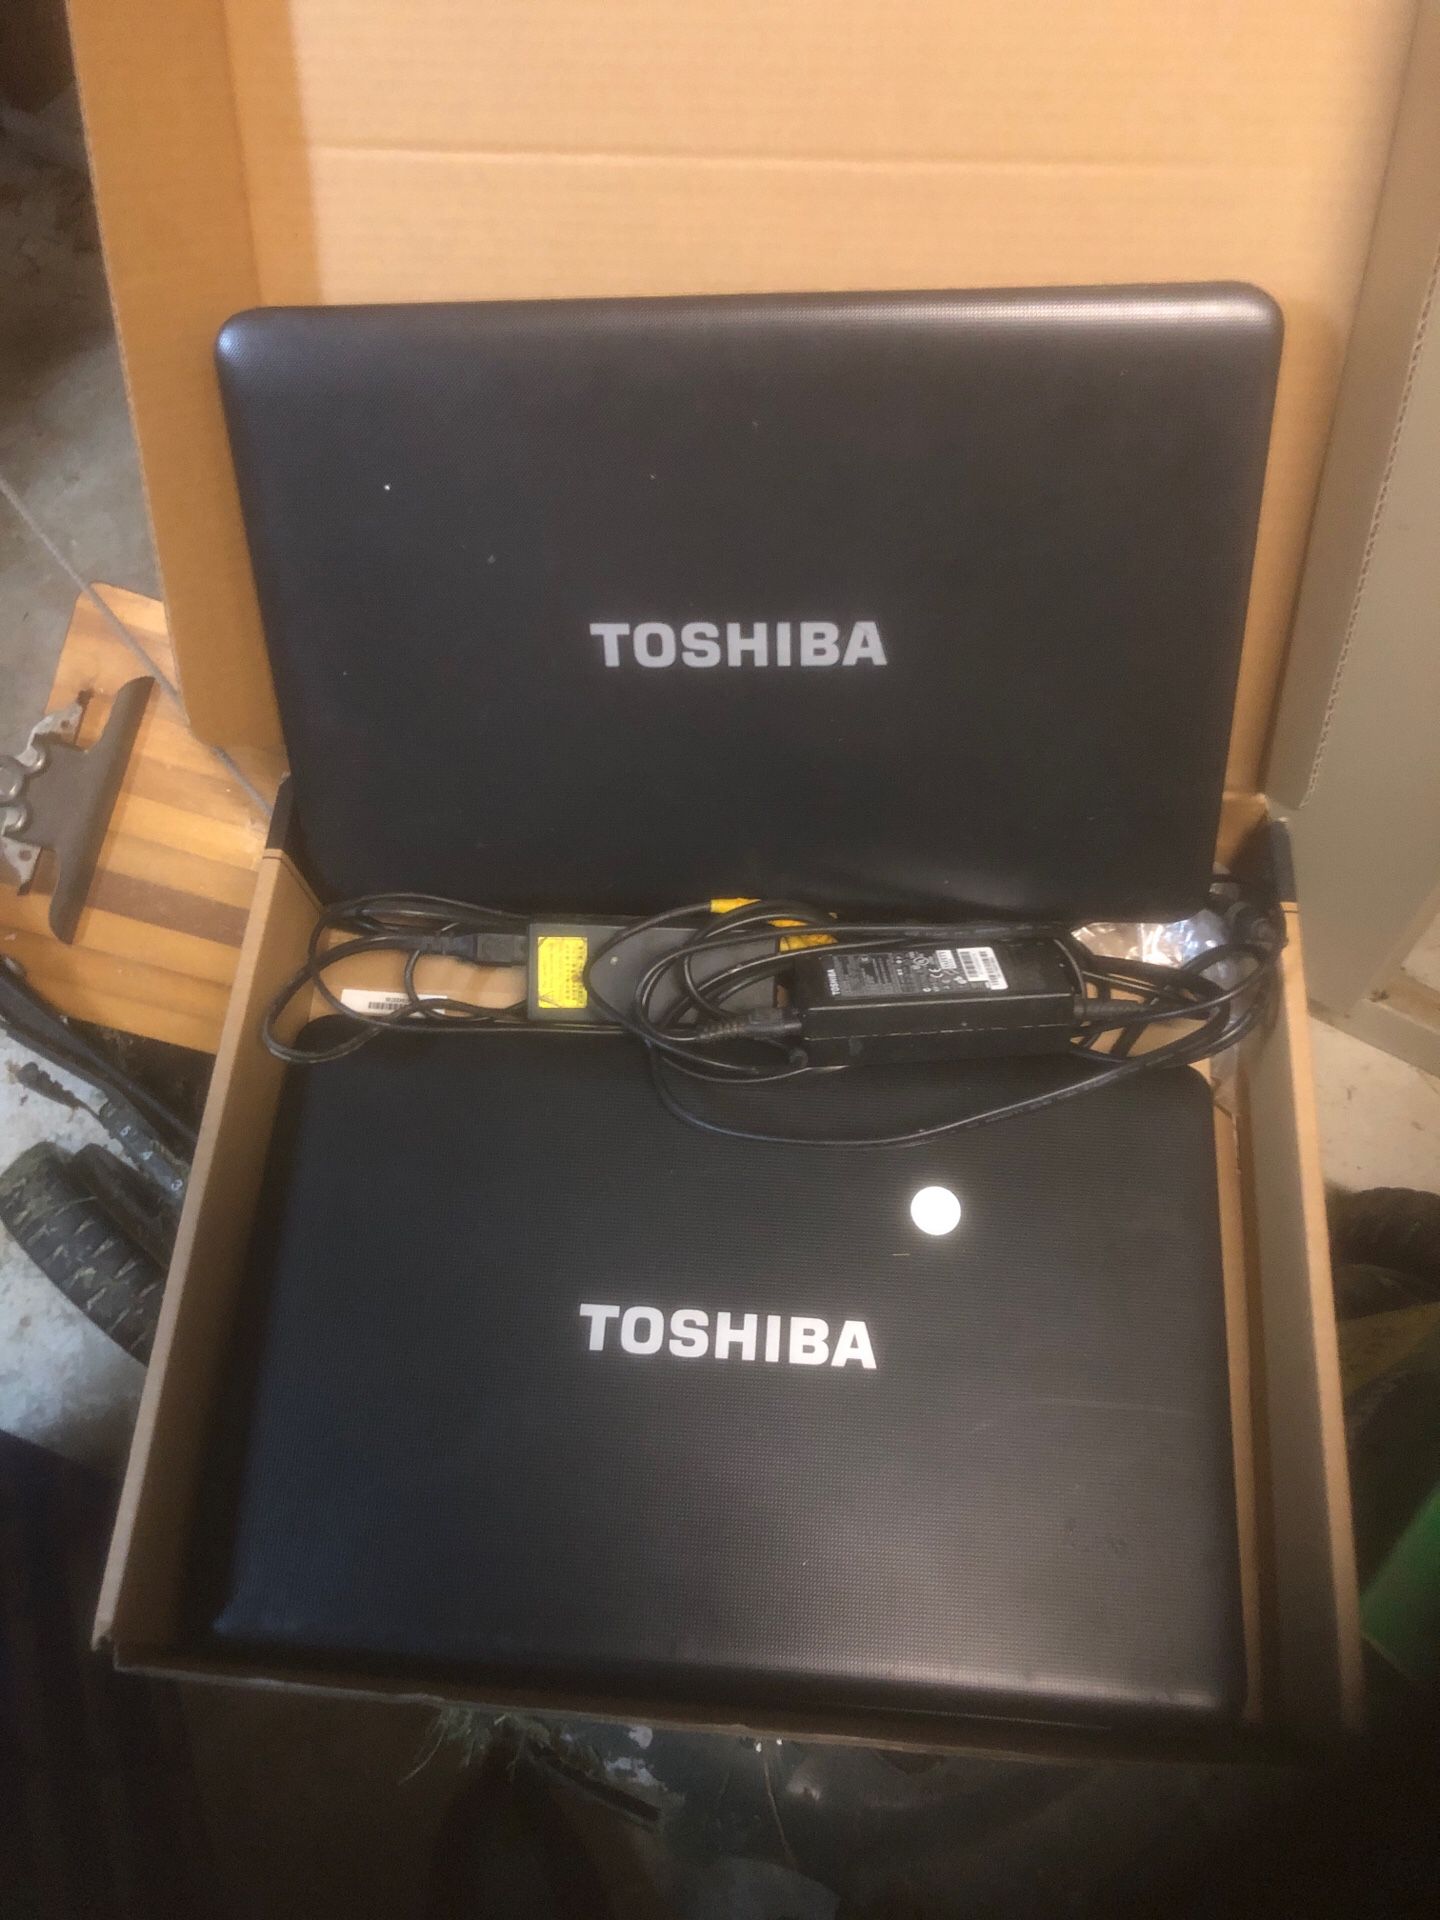 Toshiba Laptop Computers